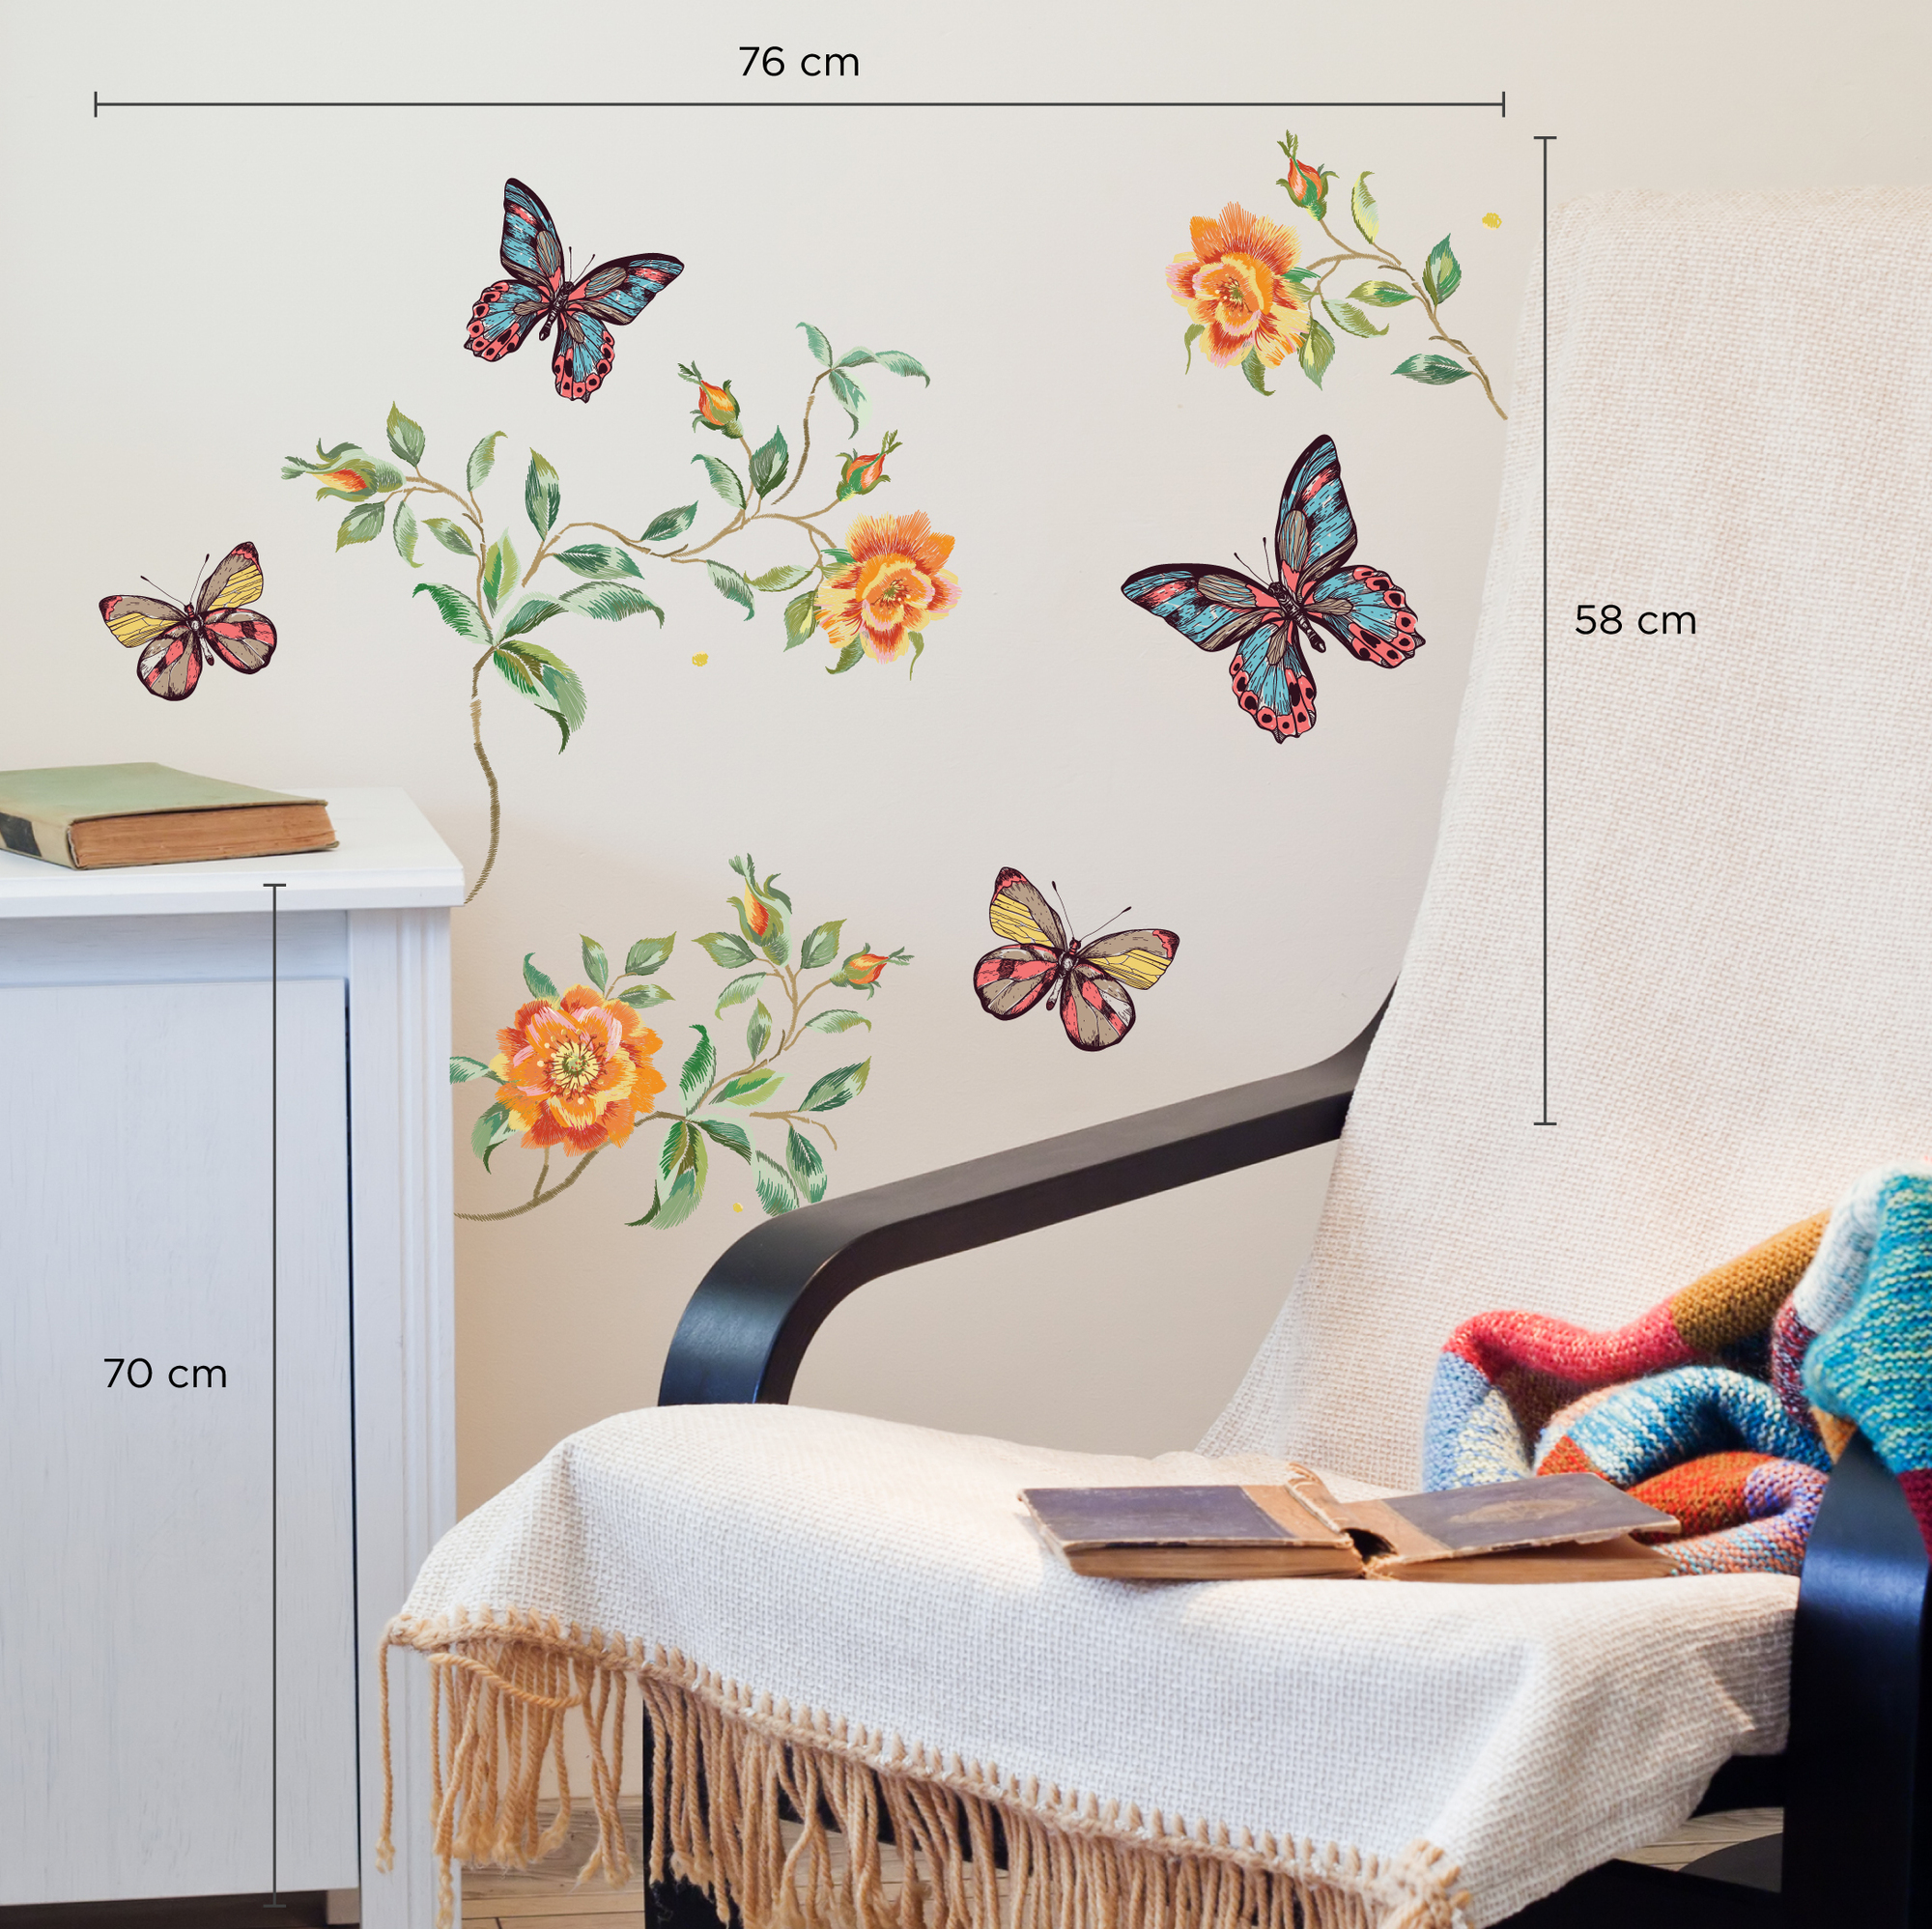 Flowers & Butterflies garden - Wall Stickers & Decals by Asian Paints